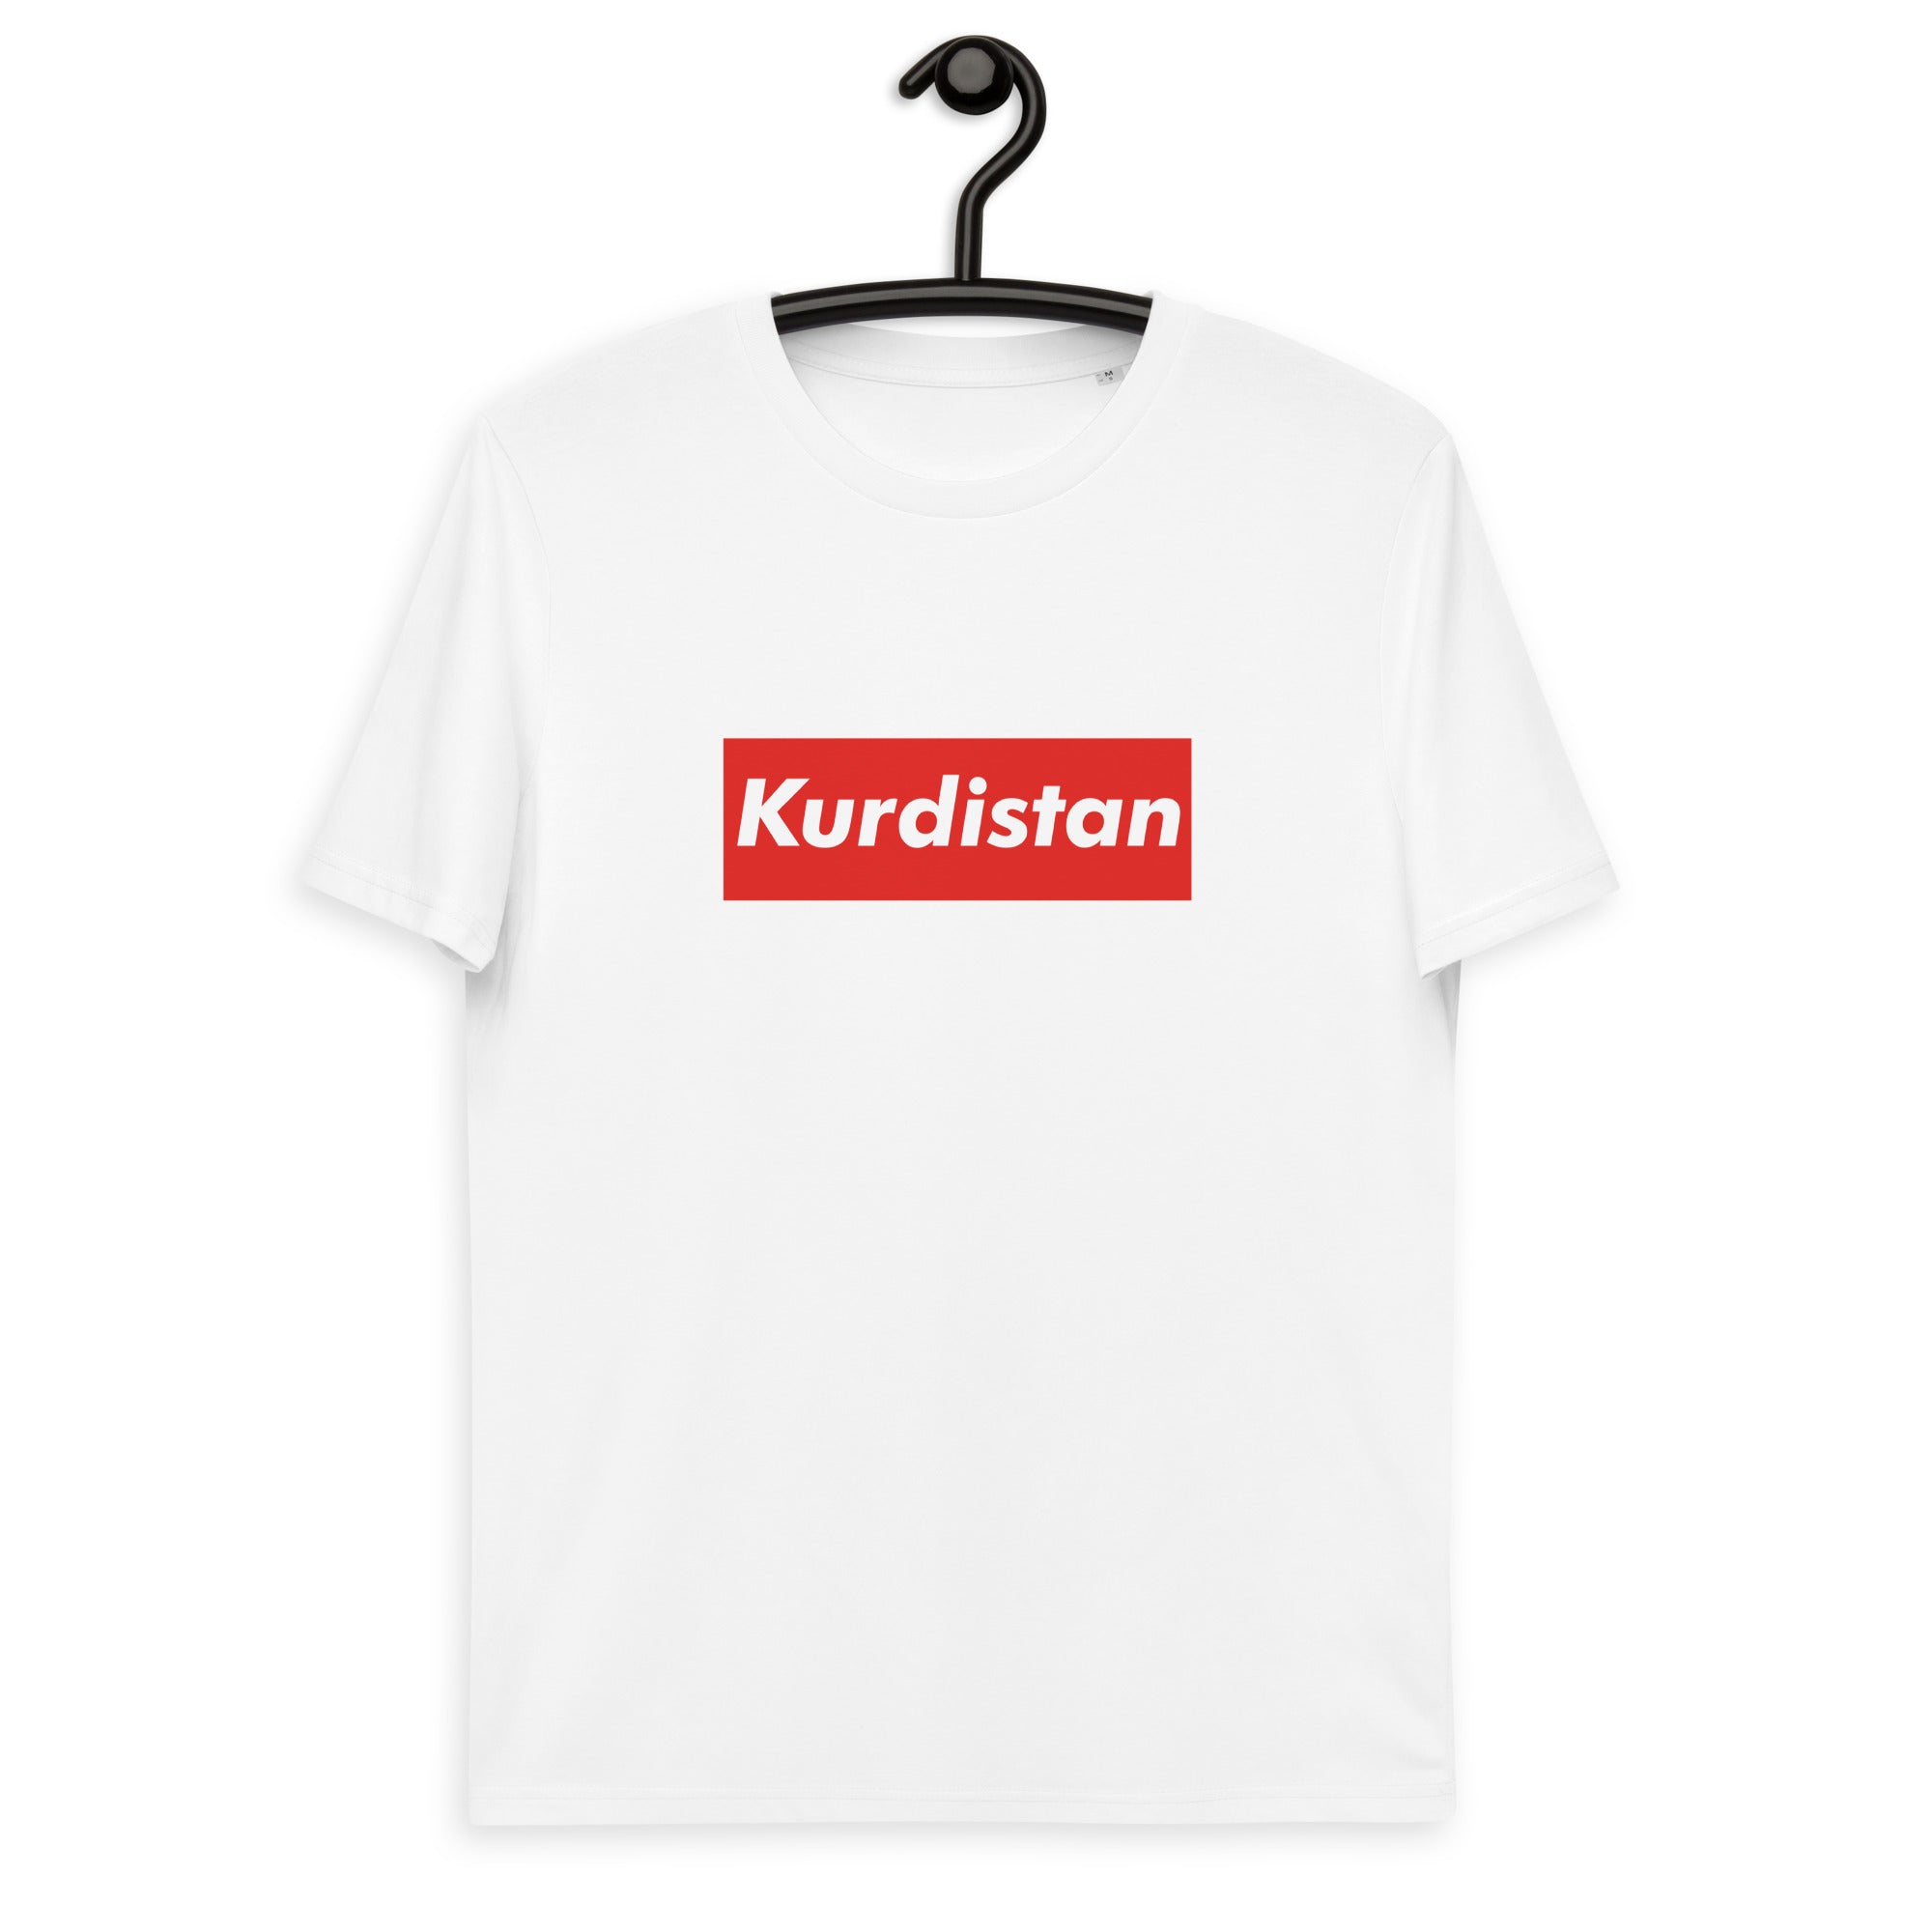 Kurdistan (supreme style) - t-shirt